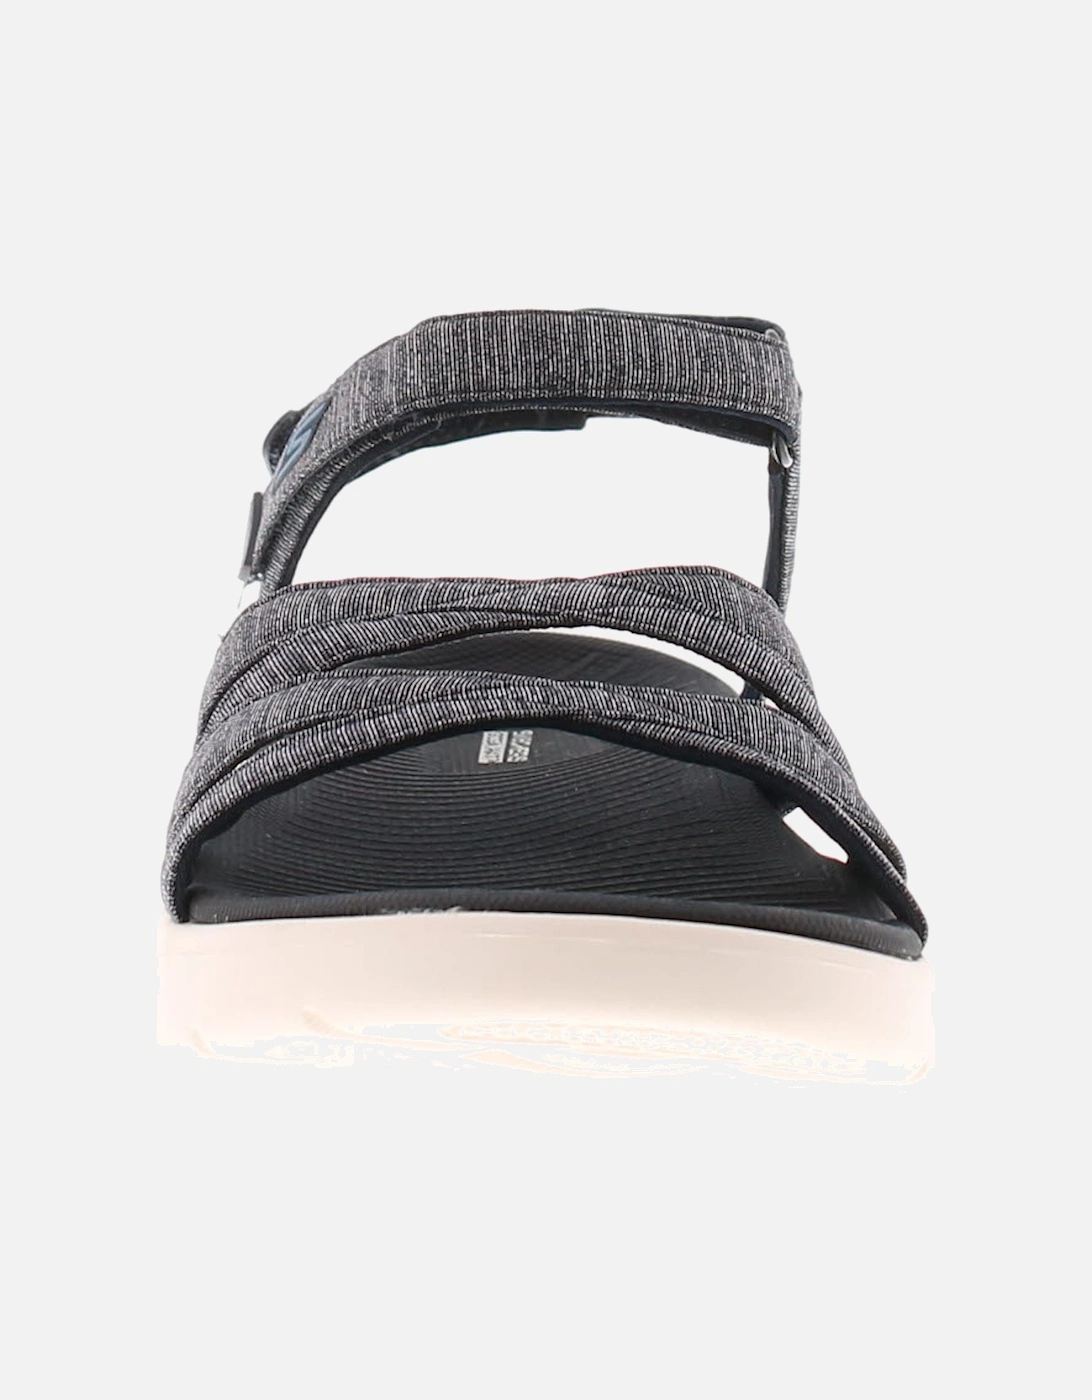 Skechers Womens Flat Sandals Go Walk Flex Sandal Touch Fastening navy UK Size